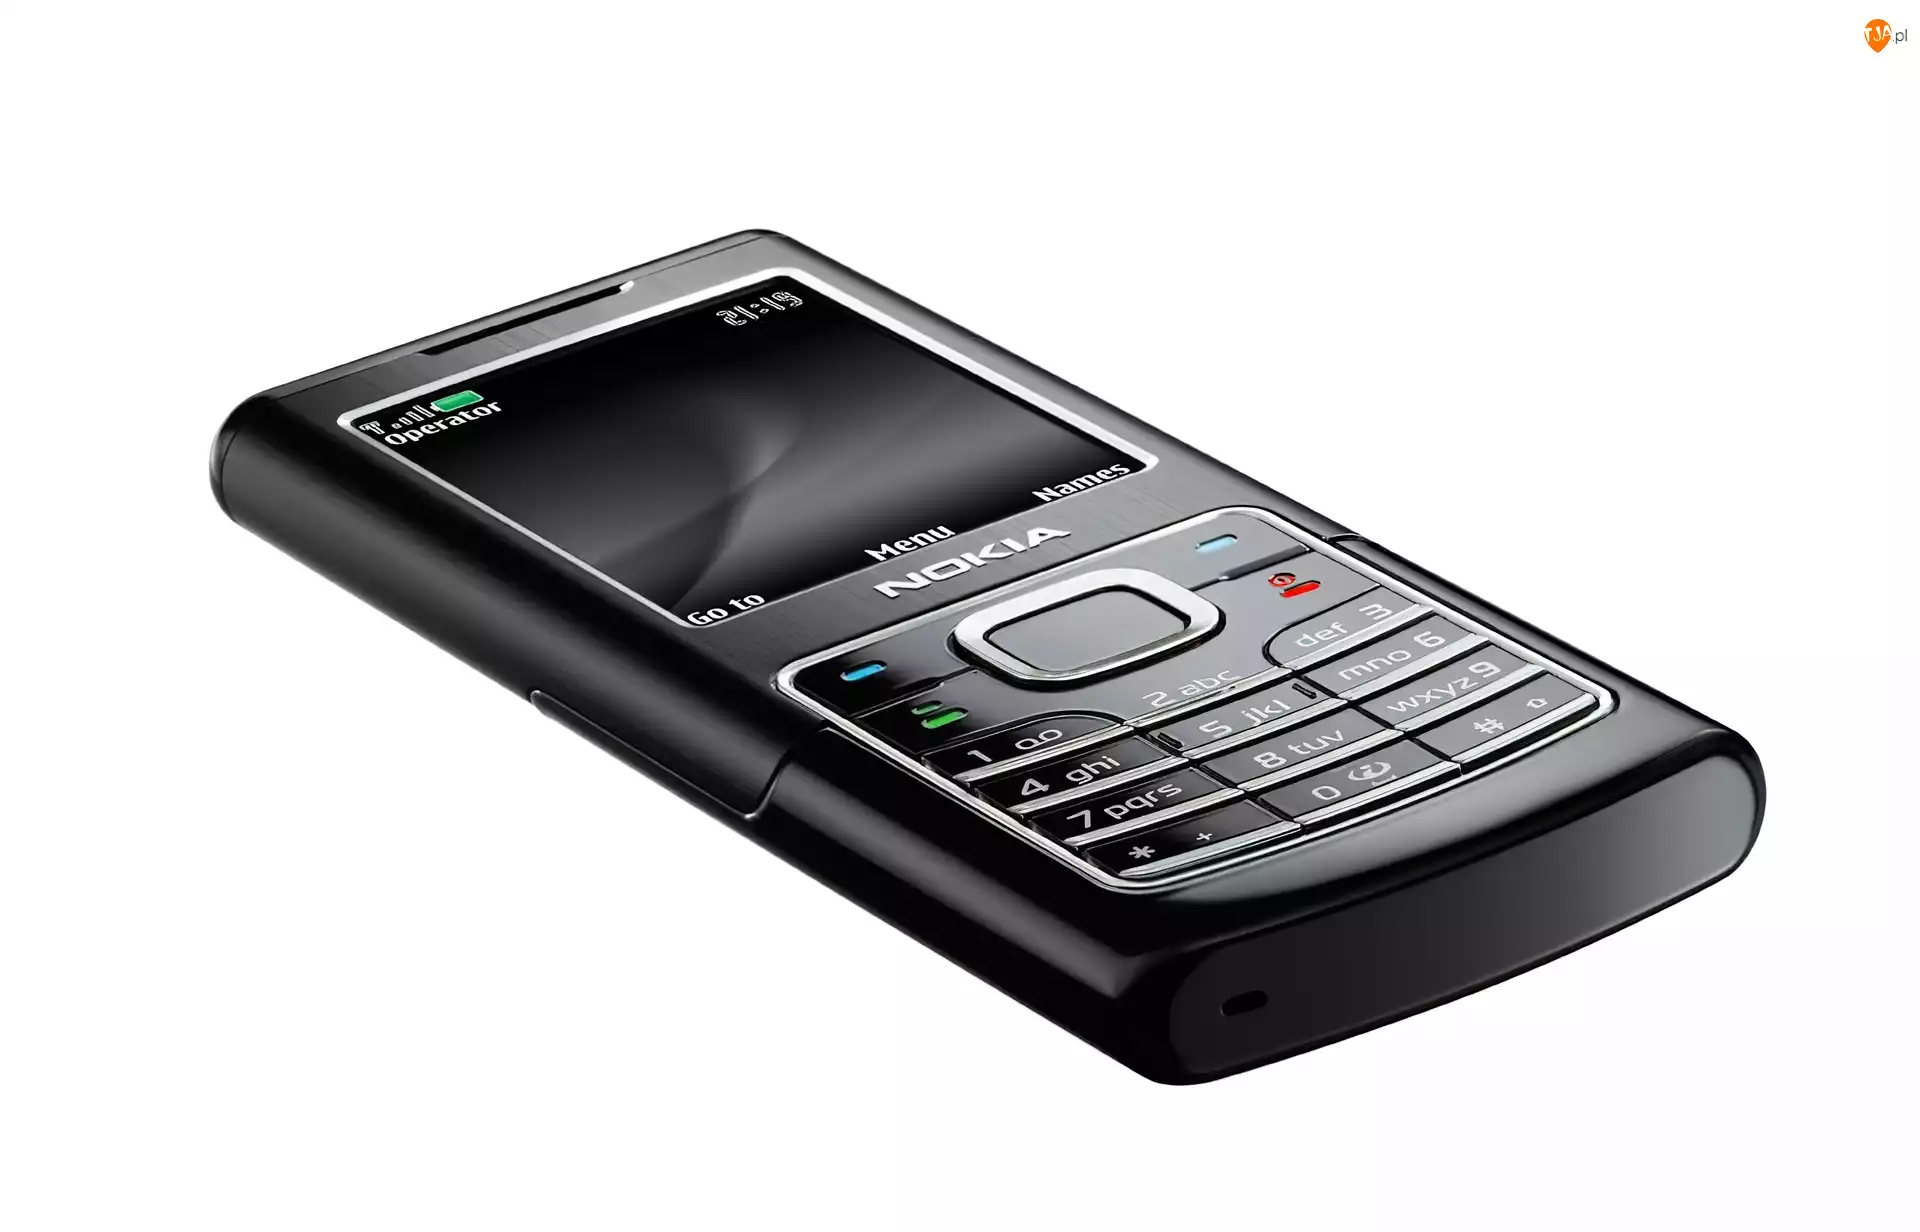 Szara, Nokia 6500 Classic, Czarna